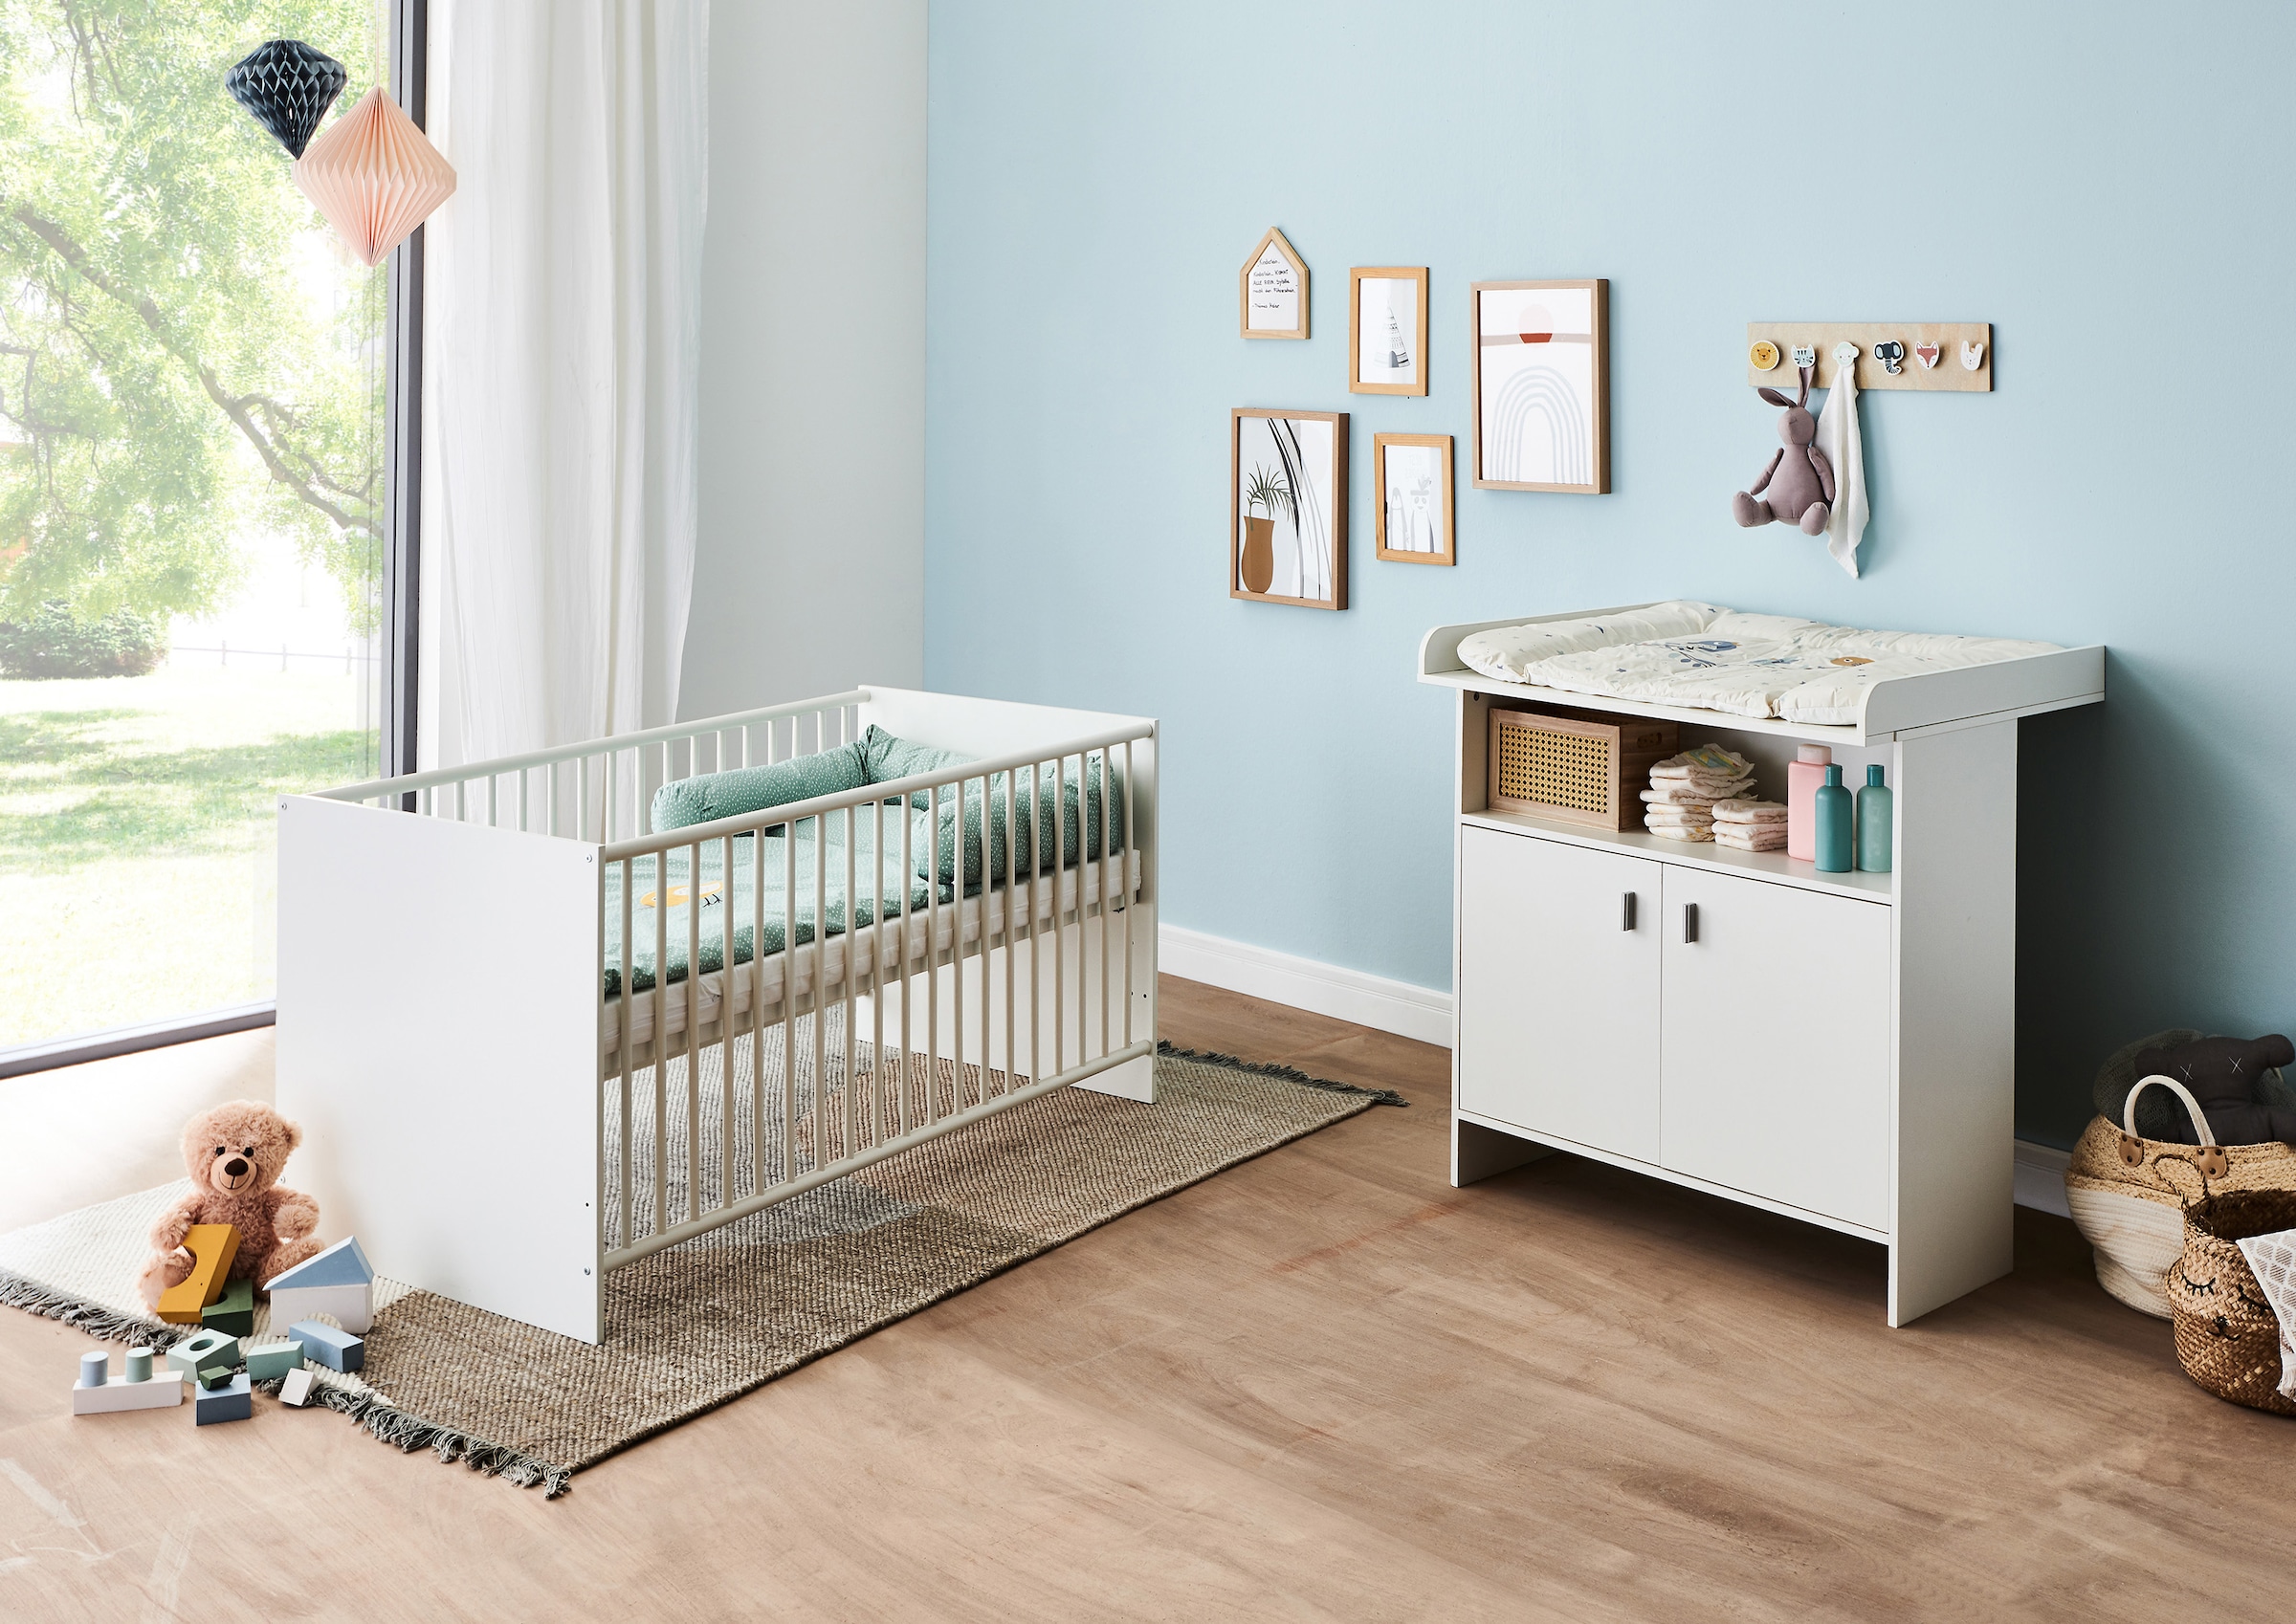 Babymöbel-Set »Joschi«, (Spar-Set, 2 St., Kinderbett, Wickelkommode), mit Kinderbett...